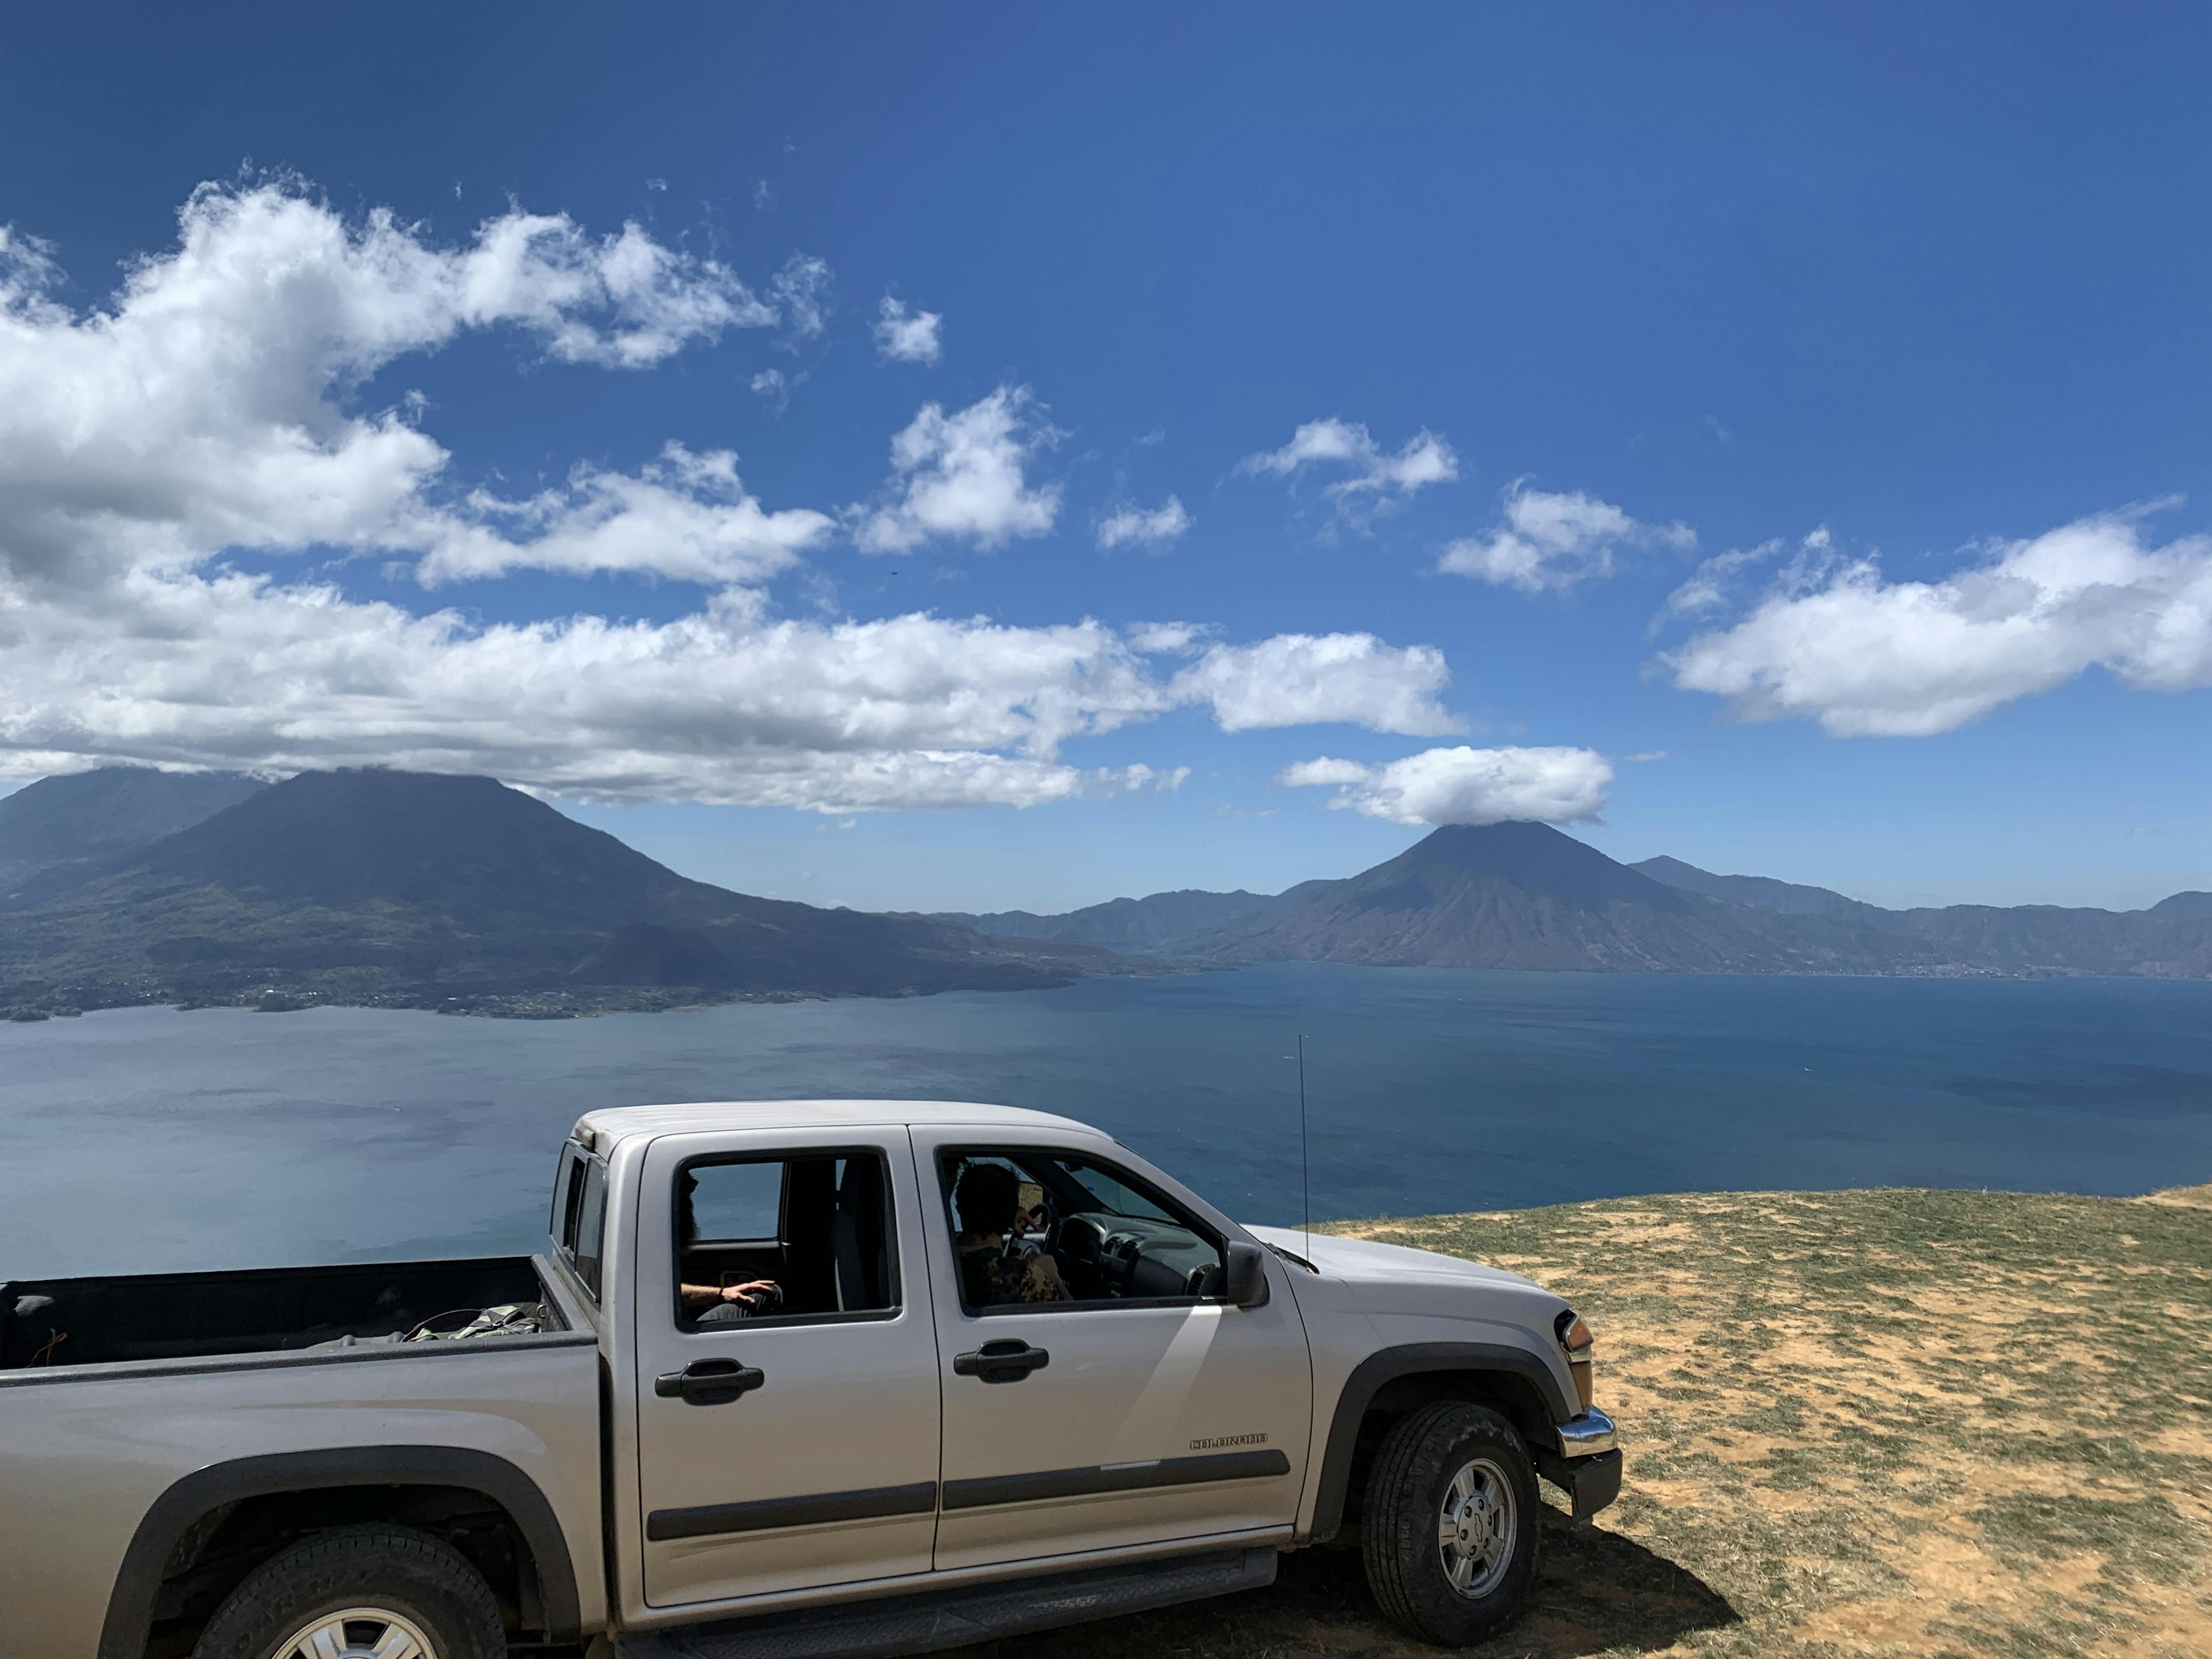 The truck in all of its splendor on beautiful Lake Atitlán, Guatemala